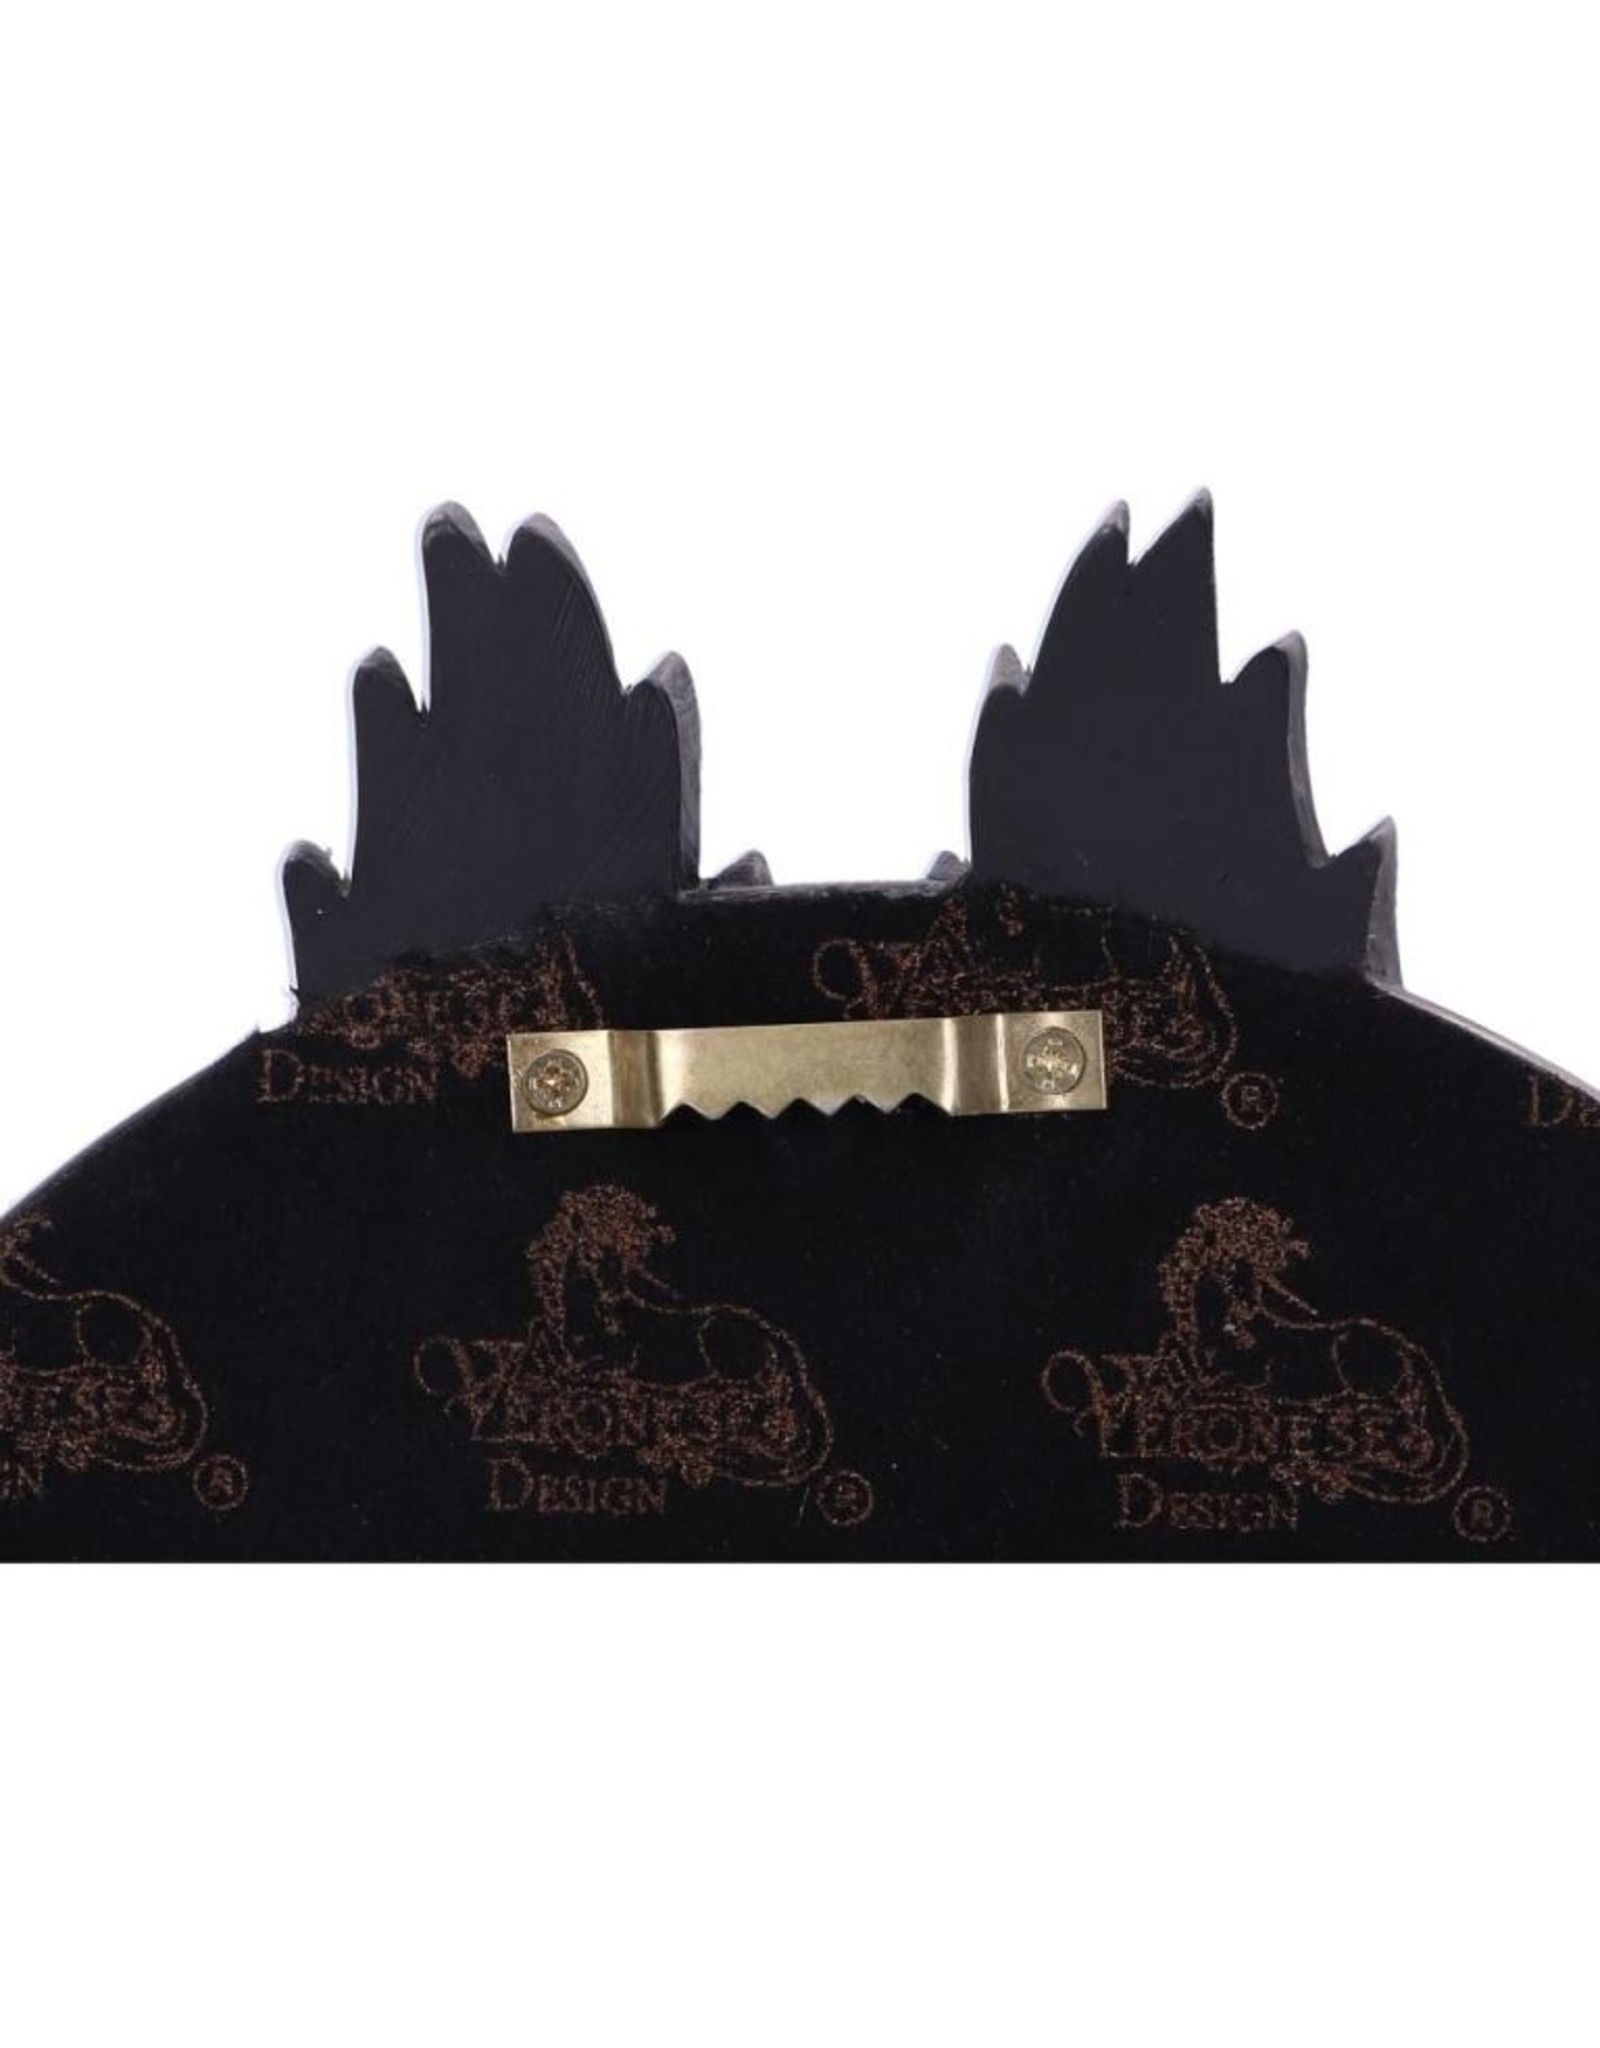 Veronese Design Giftware & Lifestyle - For Valhalla Viking Axe Hammer Raven Bronzed Wall Plaque